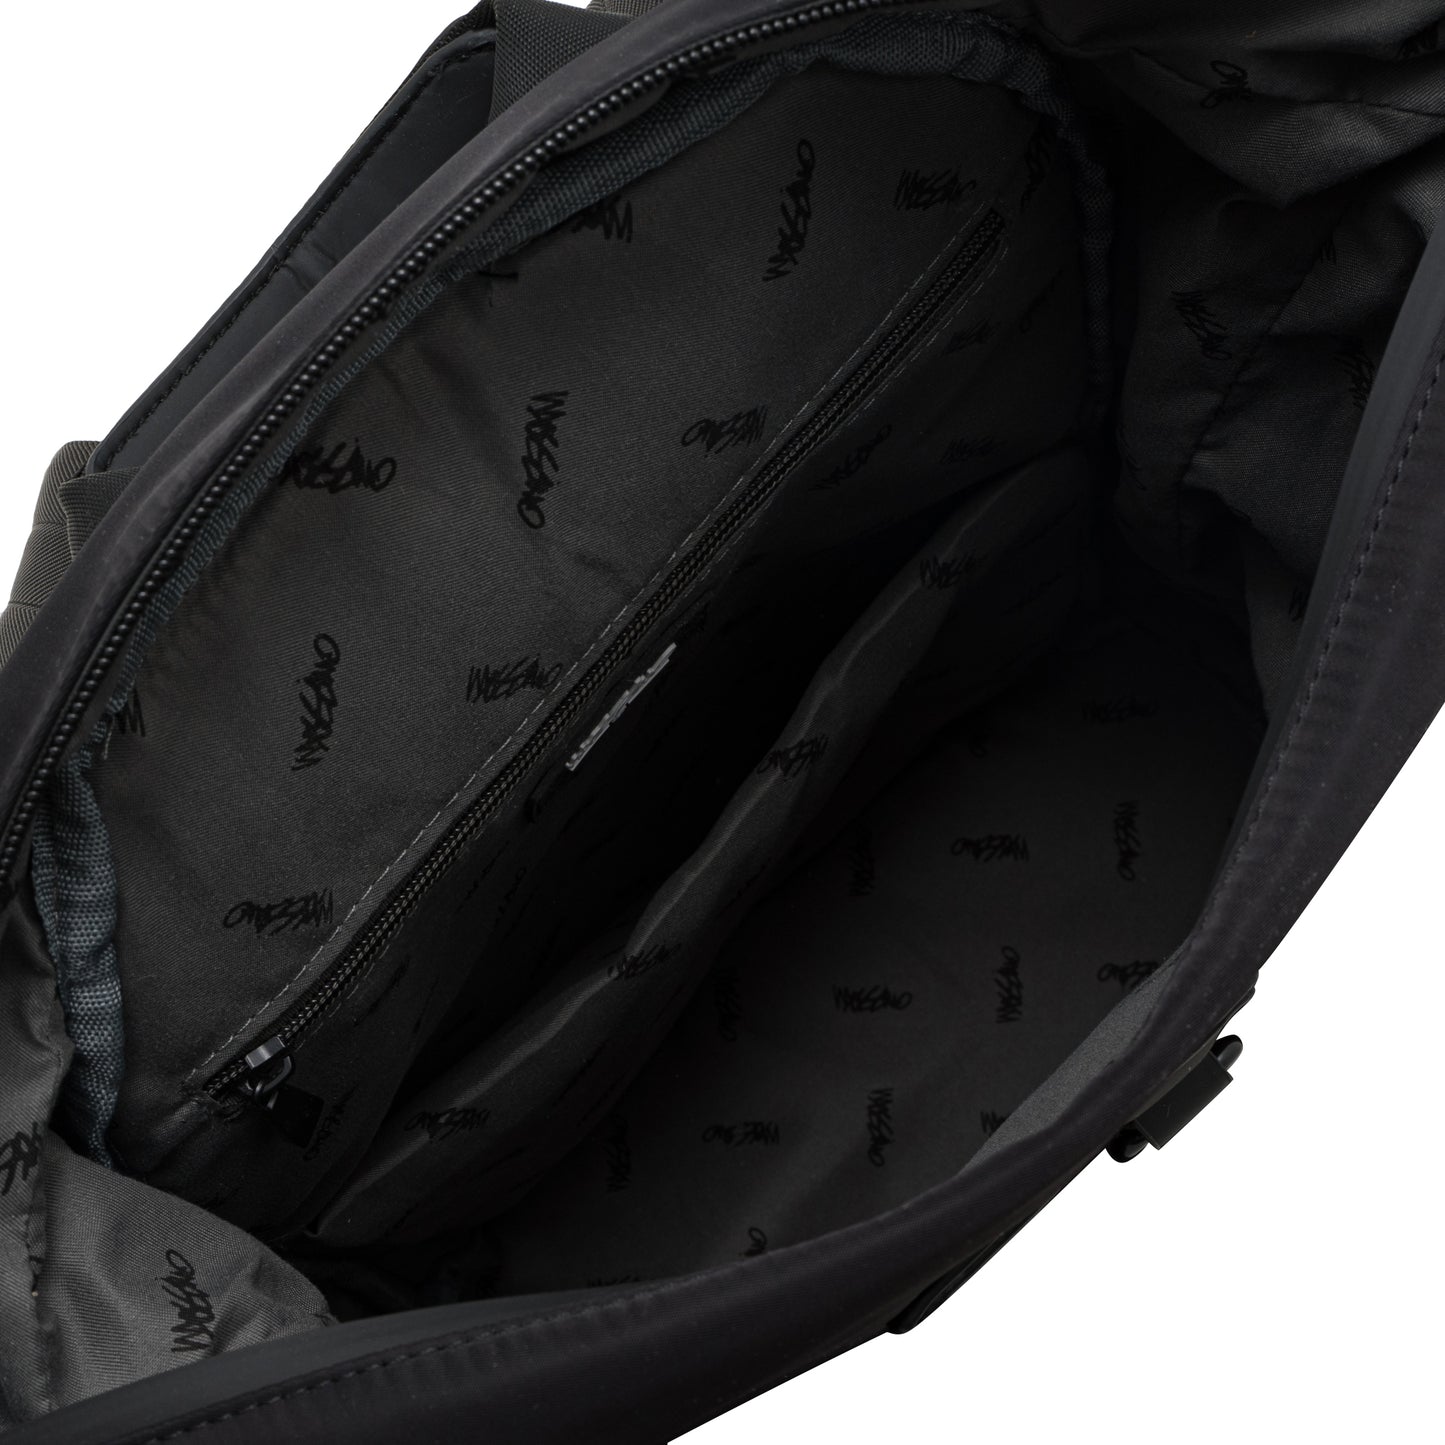 Men's Backpack